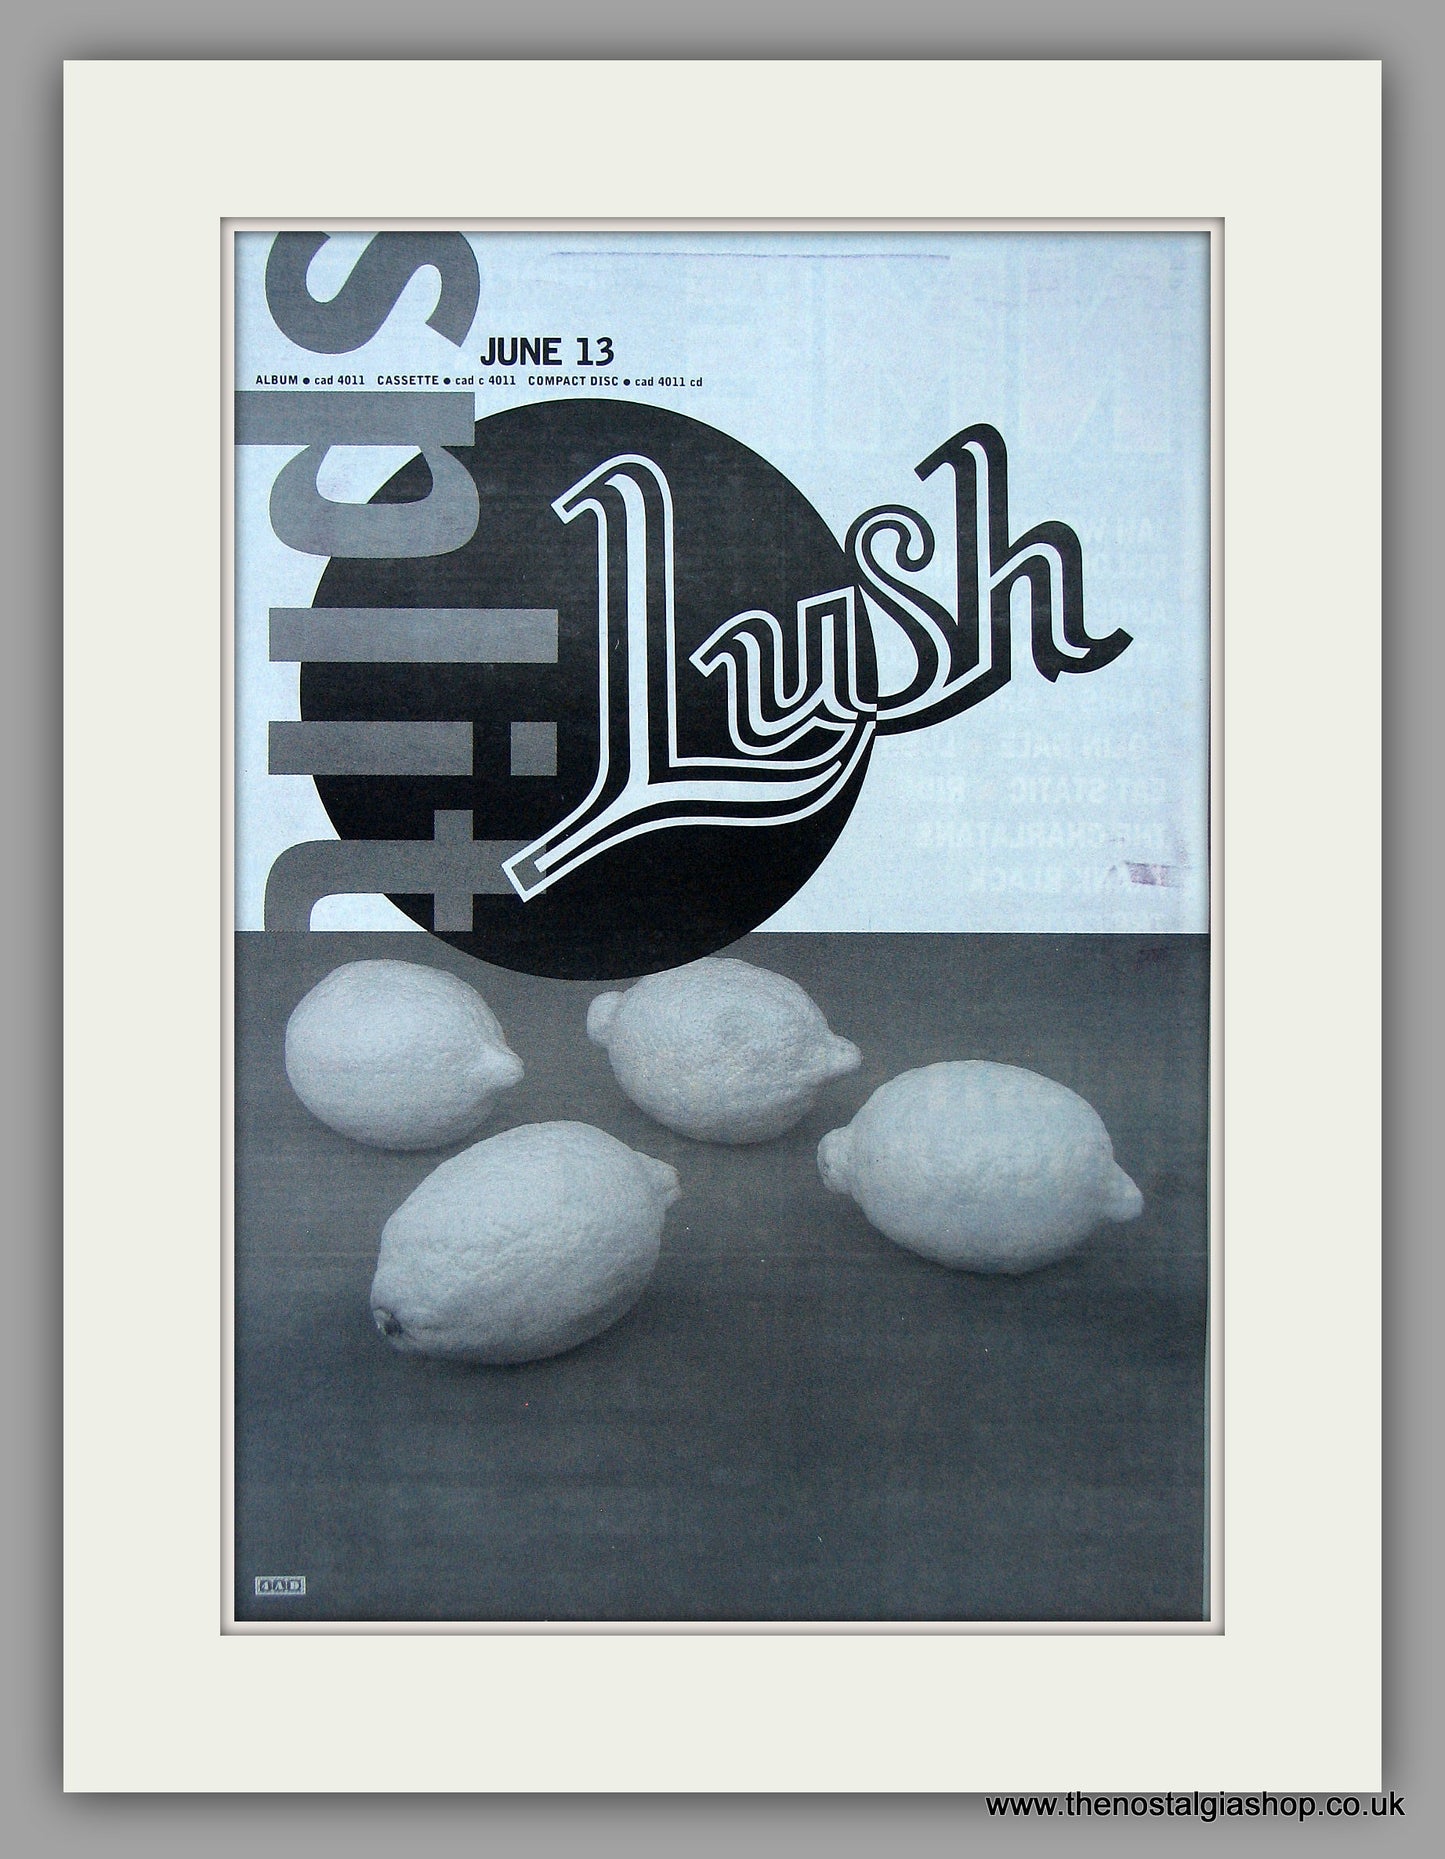 Lush - Split. Original Vintage Advert 1994 (ref AD10855)